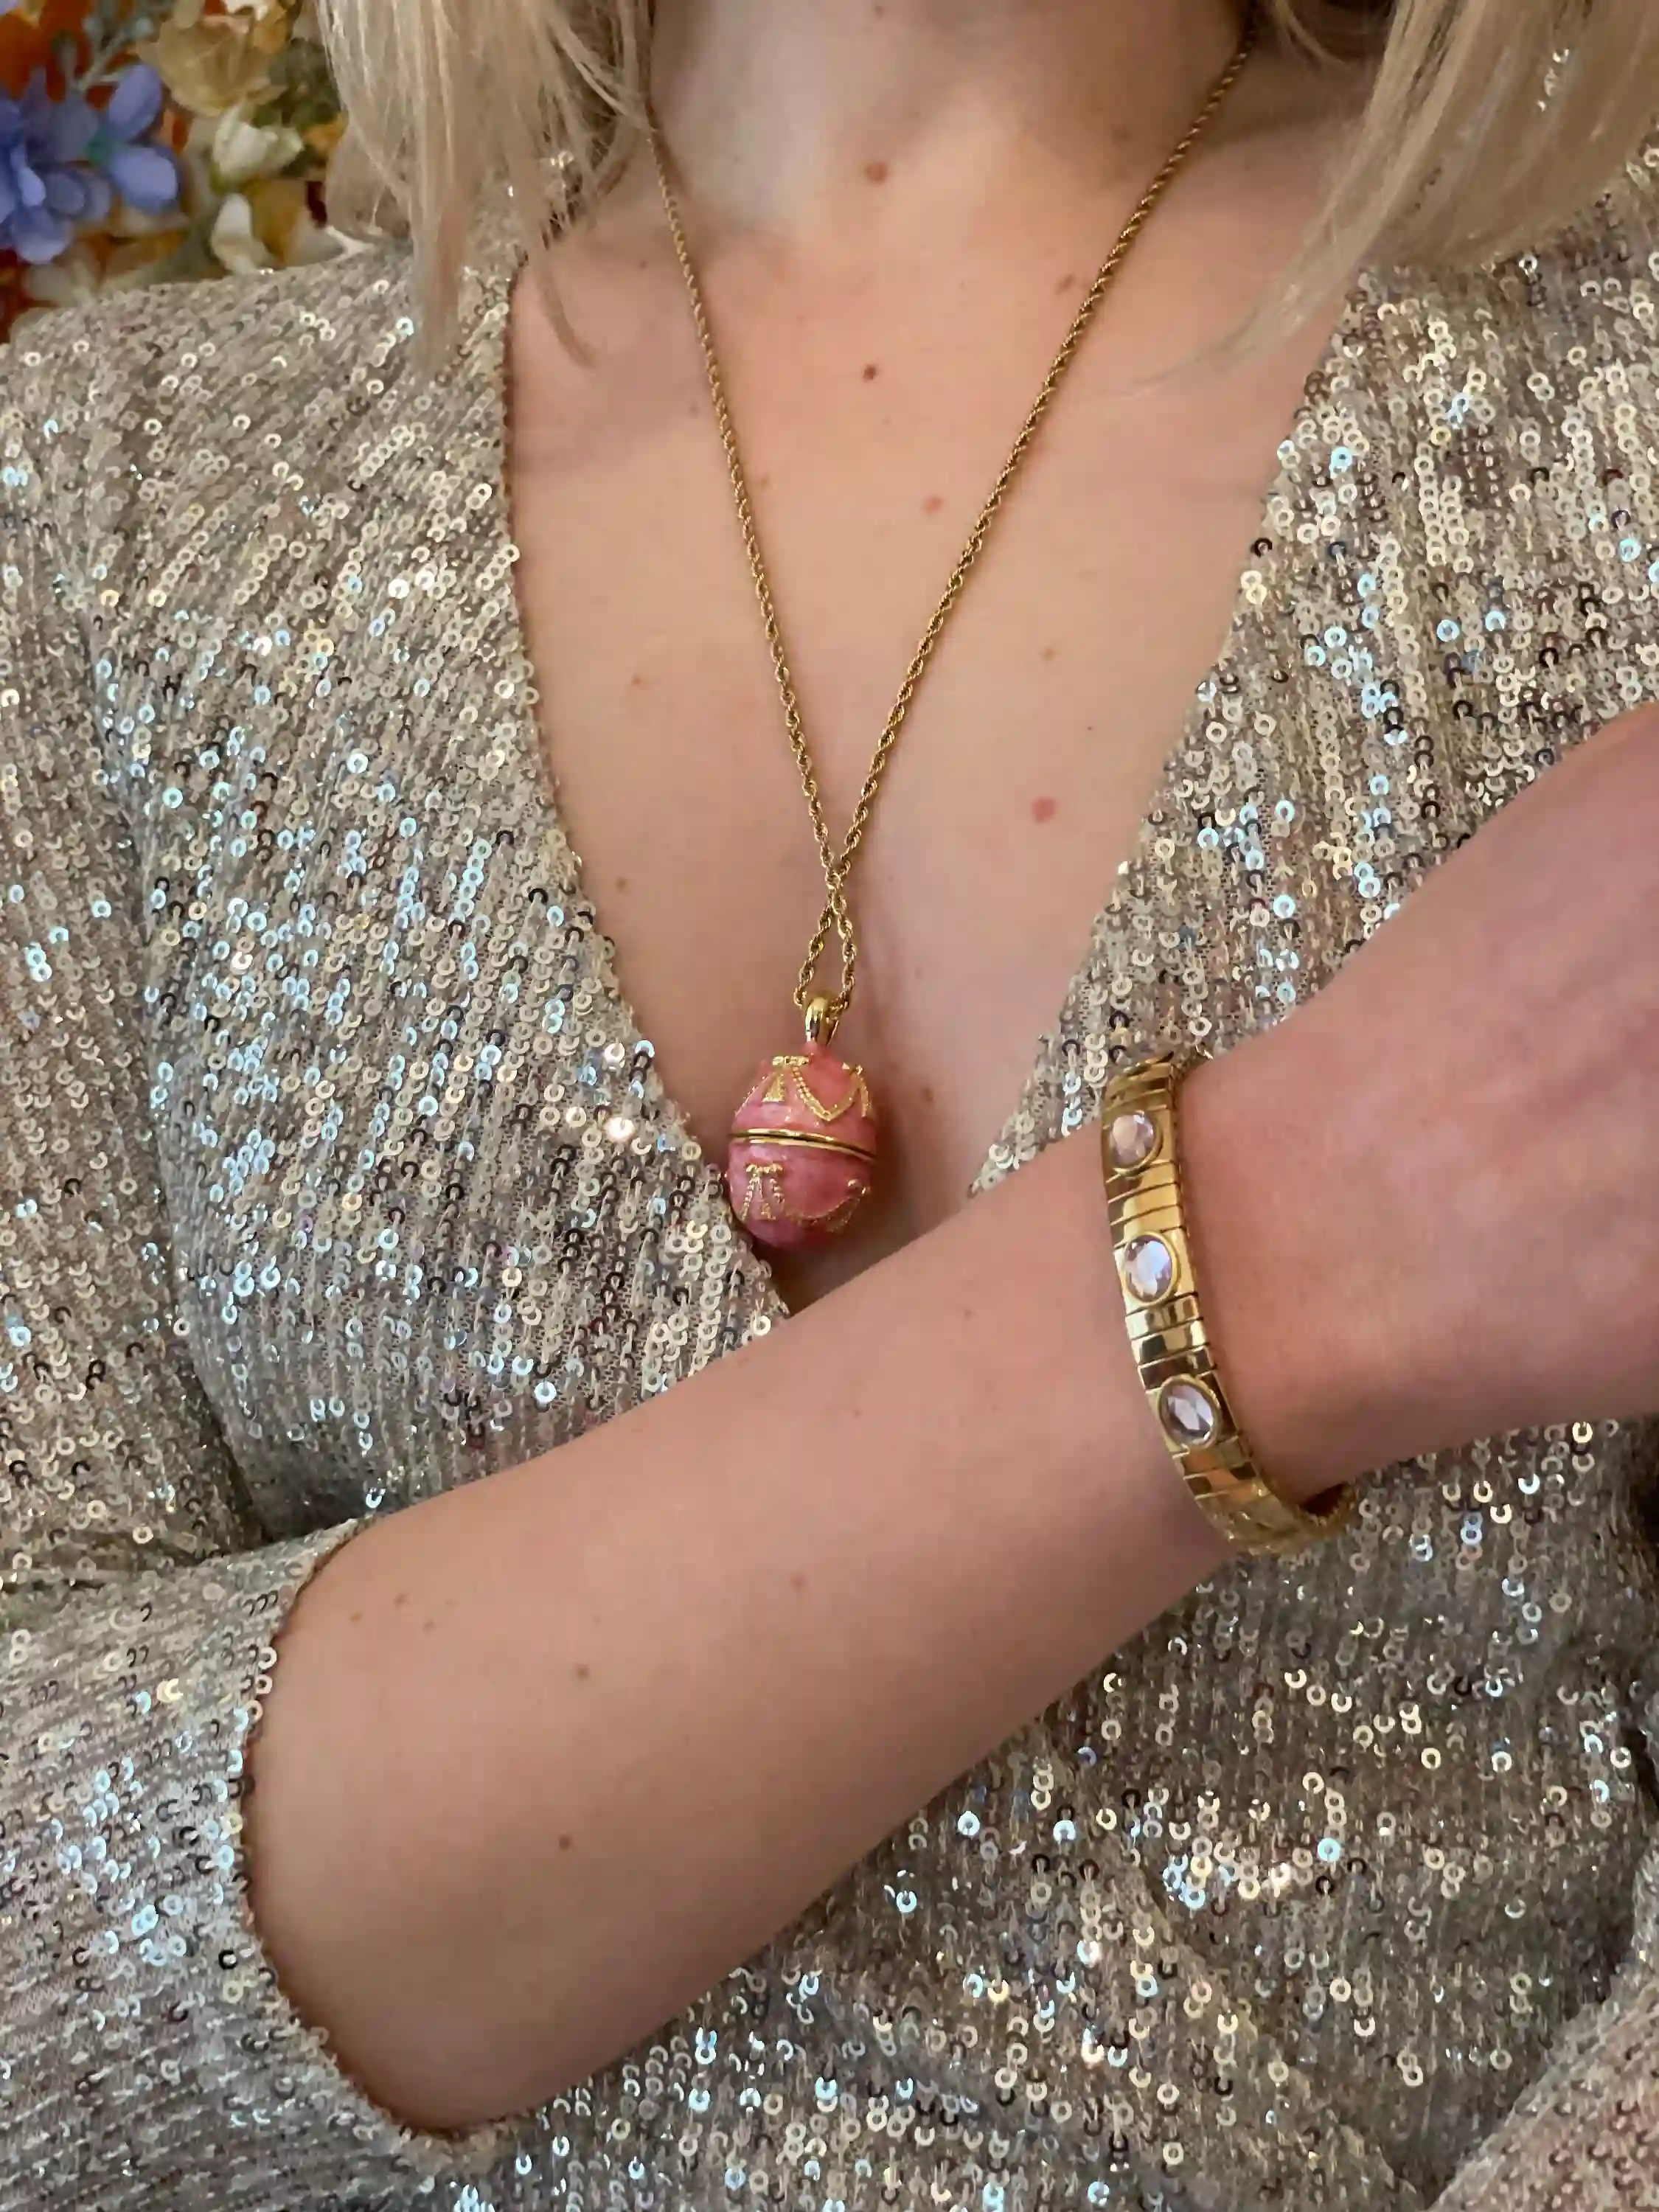 Faberge - 24k Gold Handmade - Faberge Egg pink Necklaces SET - Faberge Easter Egg Pendant - Faberge egg Jewelry for Ladies -Egg Locket Gift 